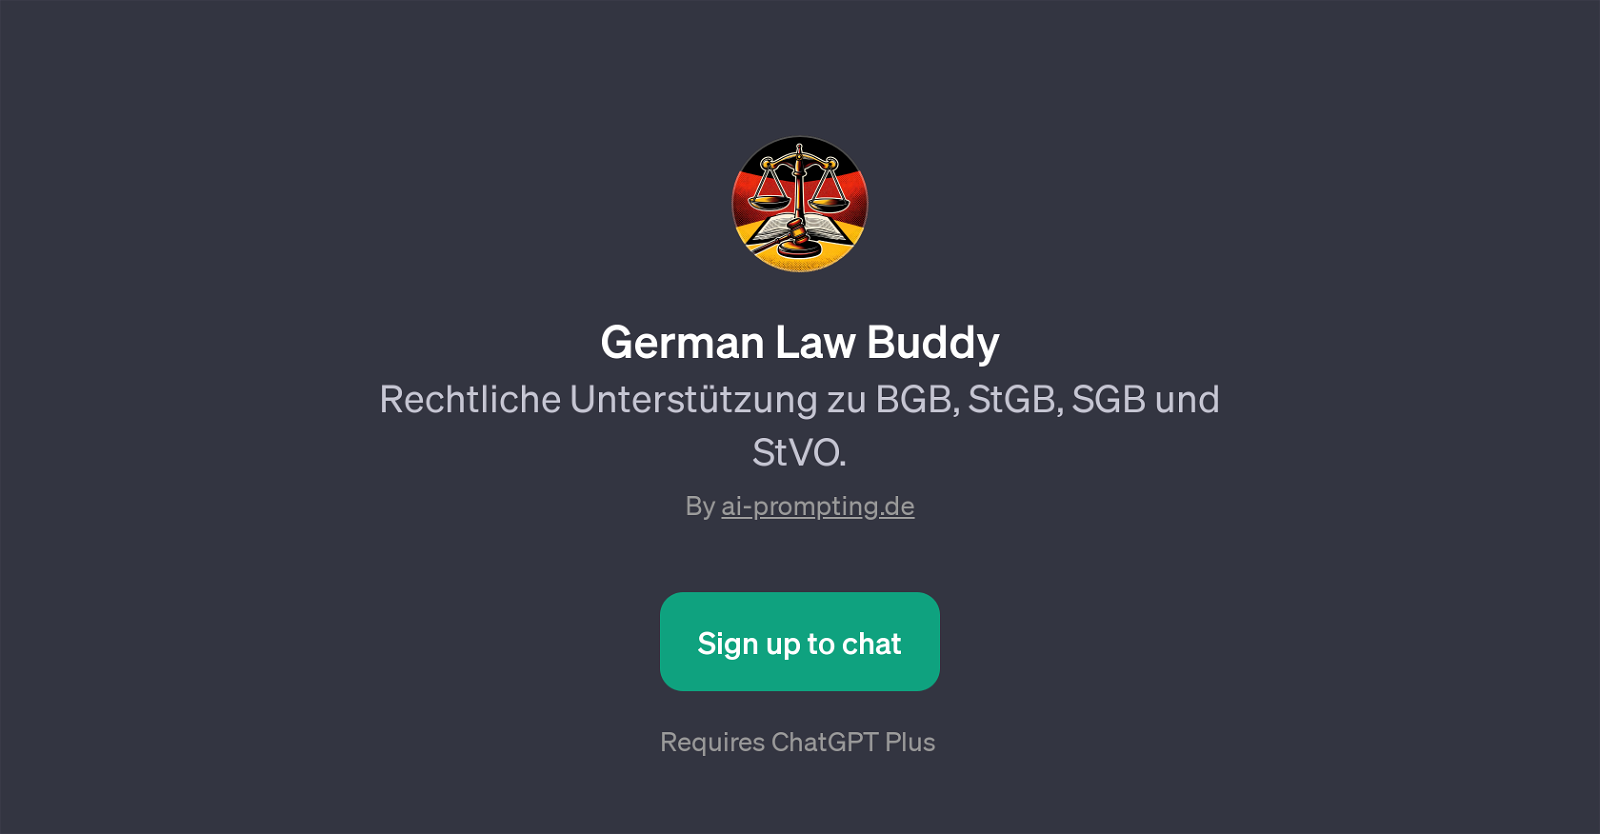 German Law Buddy website